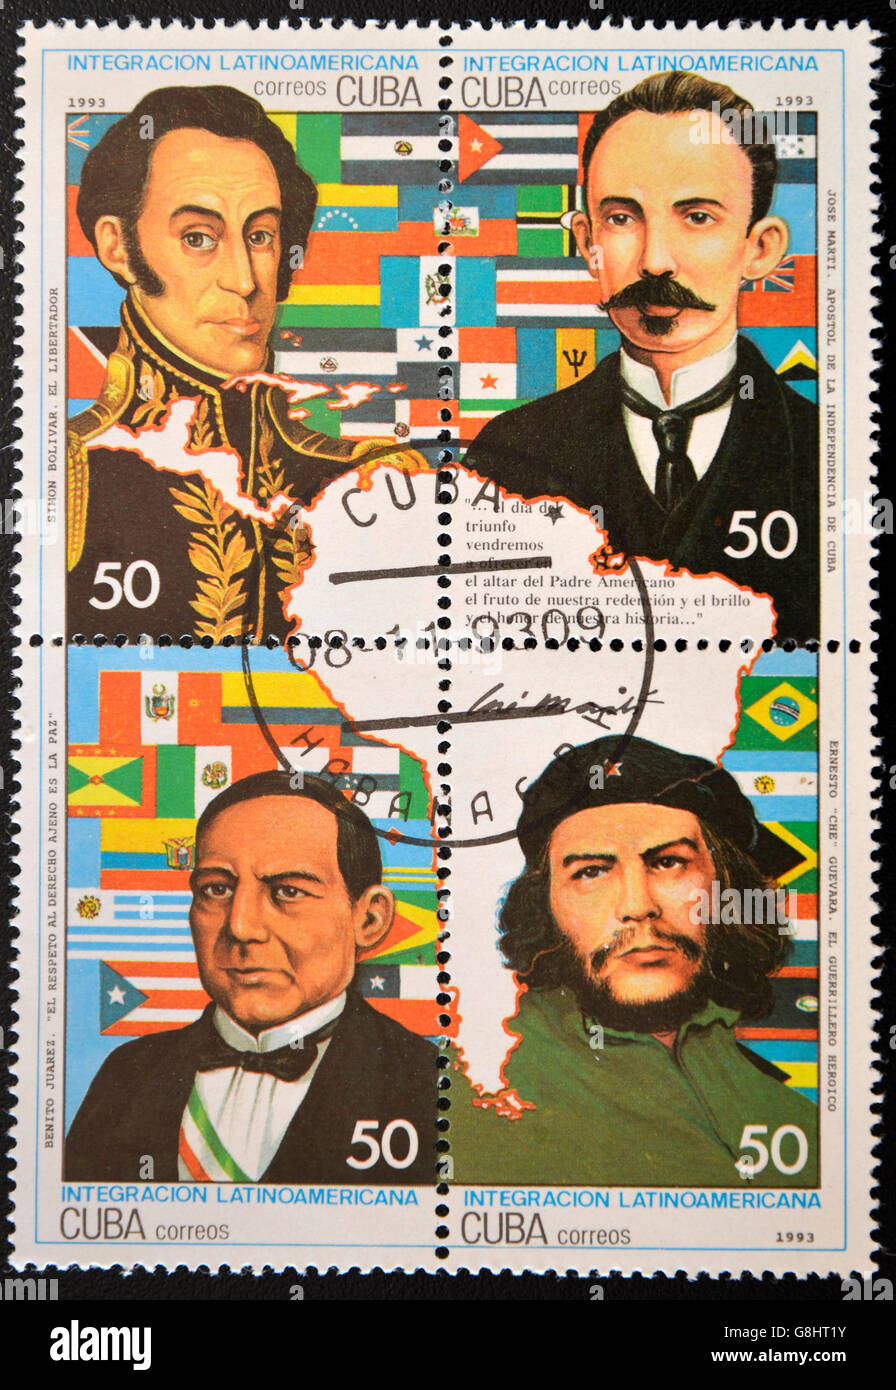 CUBA - CIRCA 1993: A stamp printed in Cuba shows historical figures of Latin American integration, circa 1993 Stock Photo